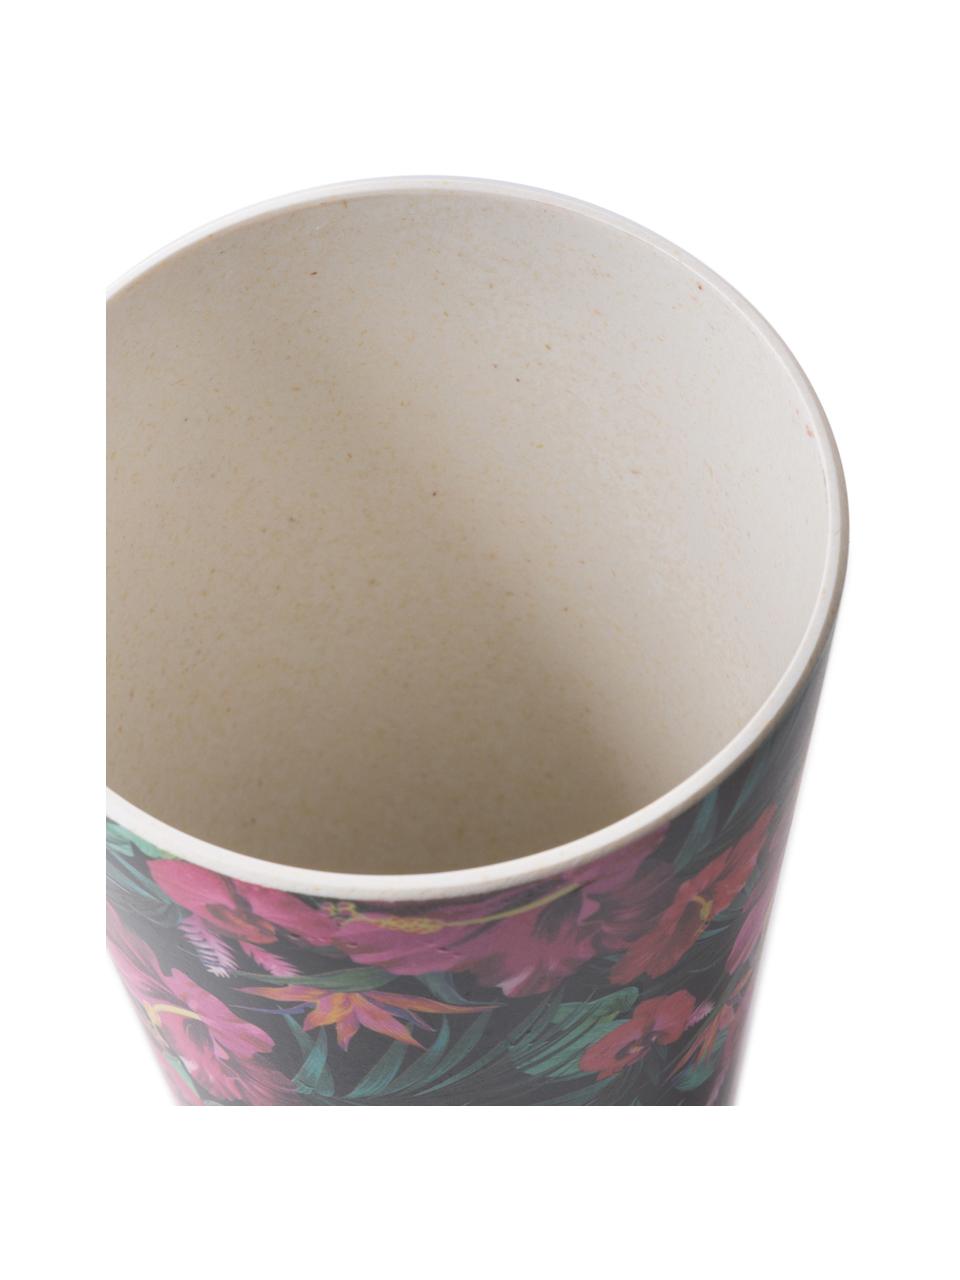 Mug en bambou Tropical Flower, Tons verts, couleurs fuchsia, rouge, blanc